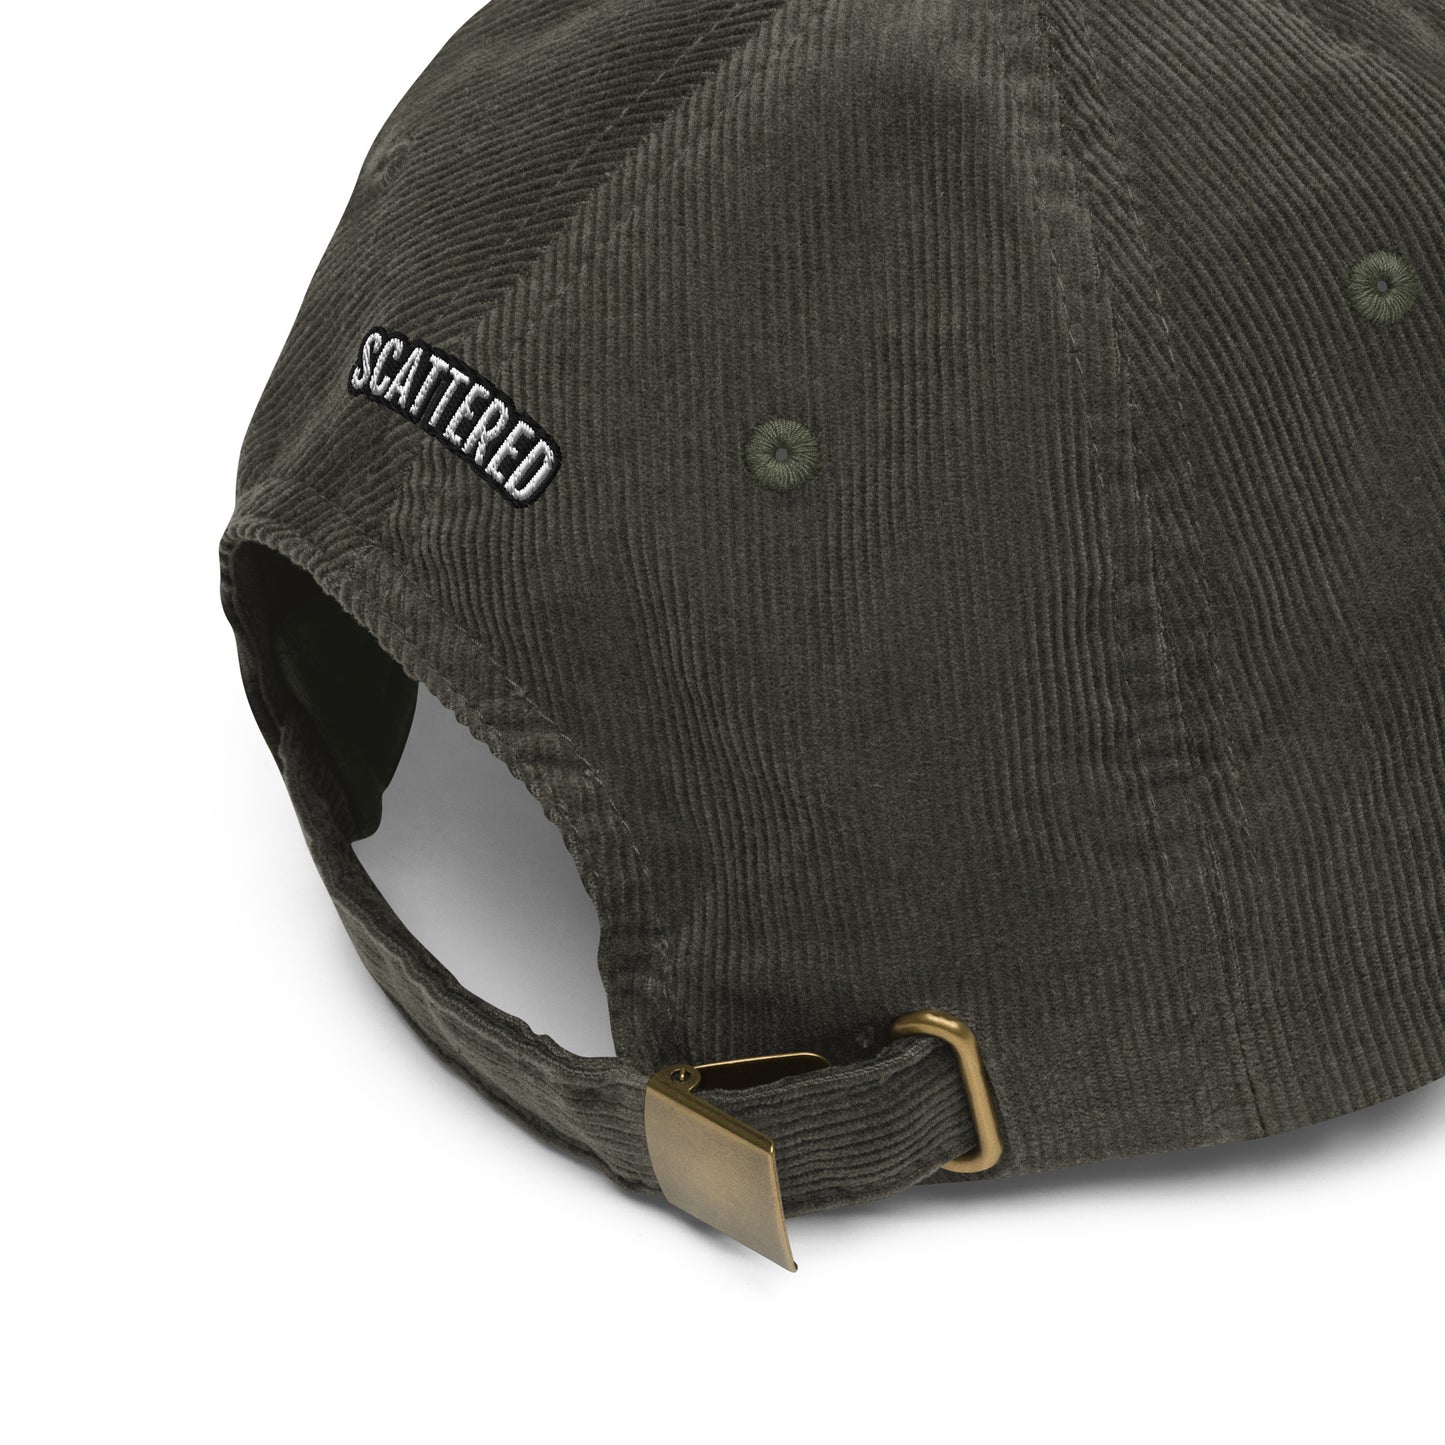 New York Apple Logo Embroidered Olive Vintage Corduroy Hat Scattered Streetwear